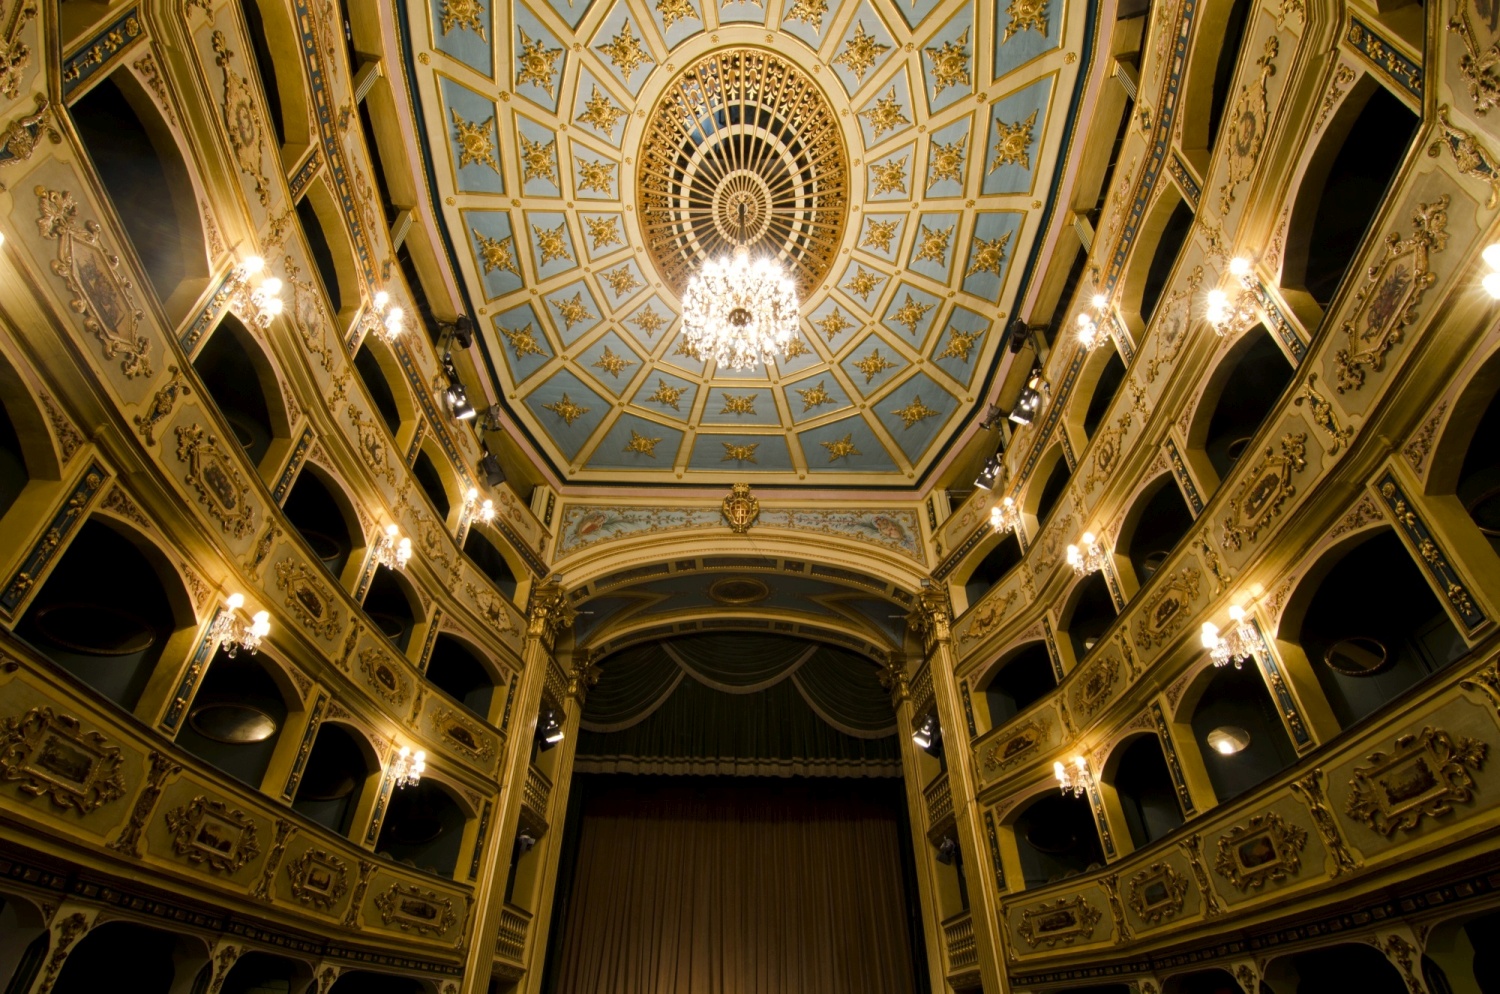 manoel theatre in valletta will be hosting the Malta Philharmonic Orchestra